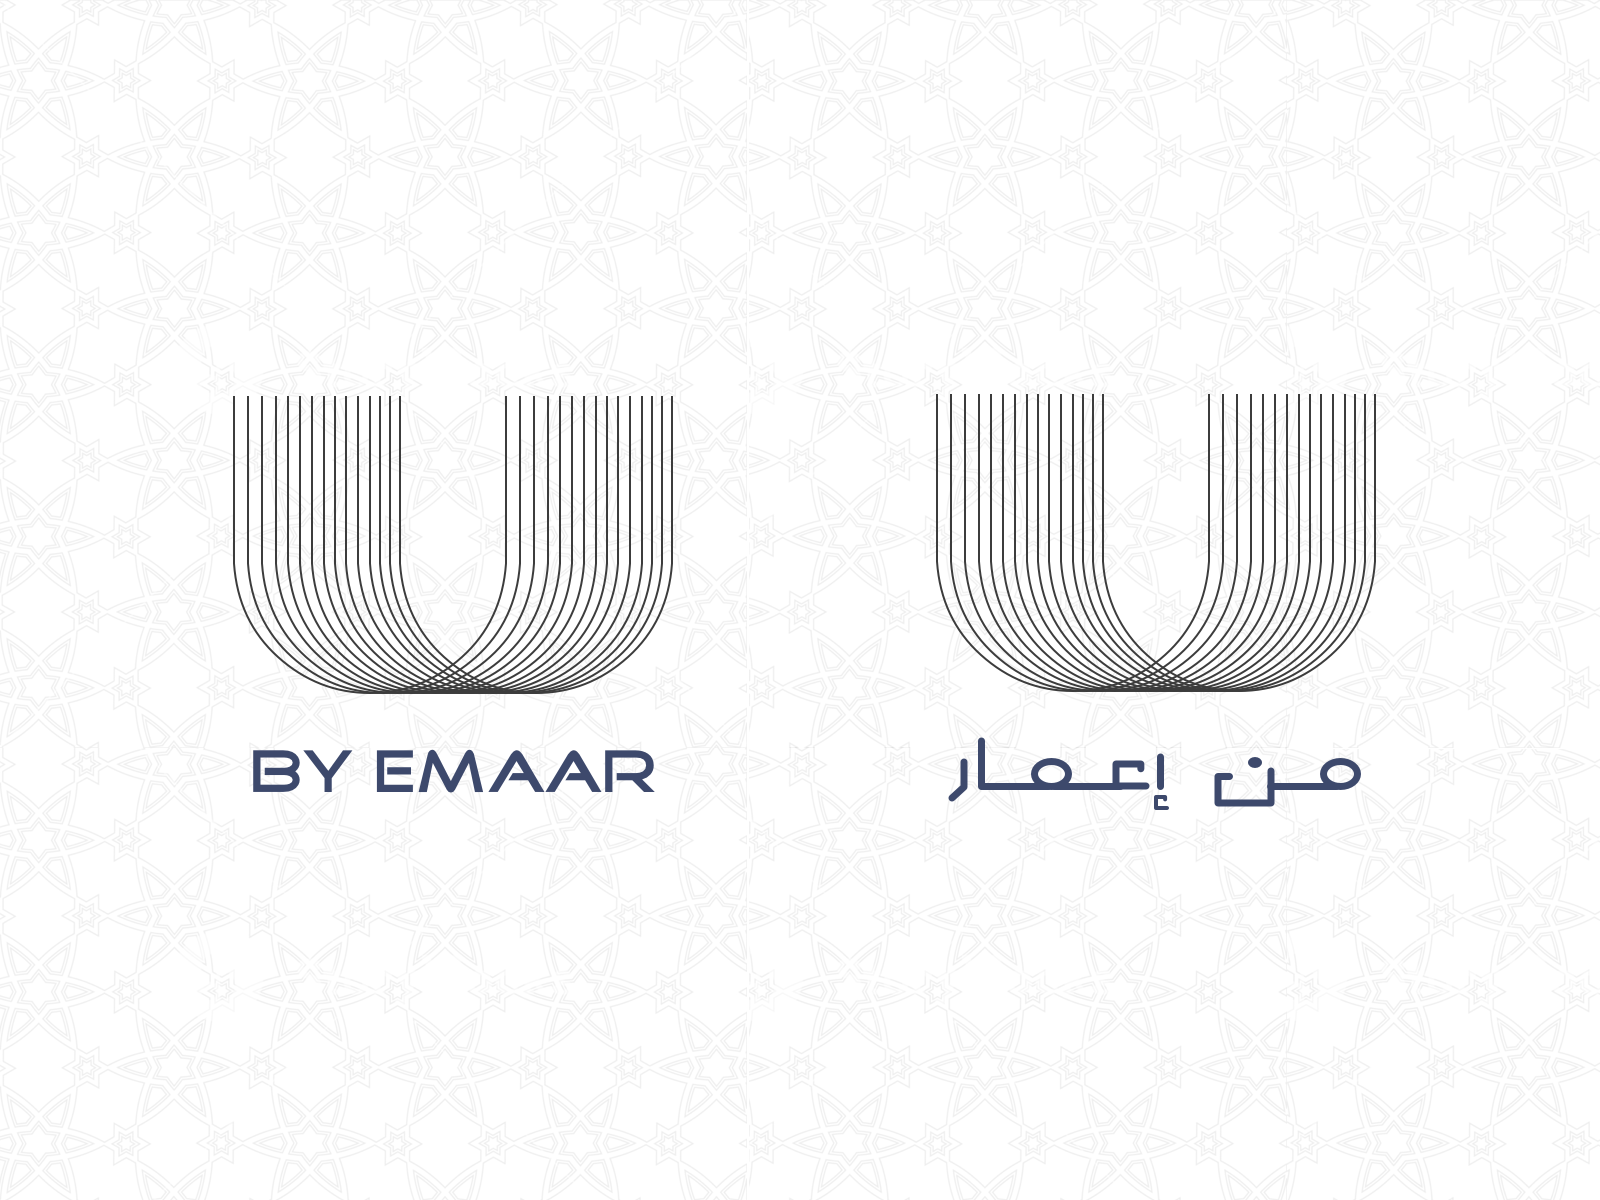 olx logo by Abbas on Dribbble